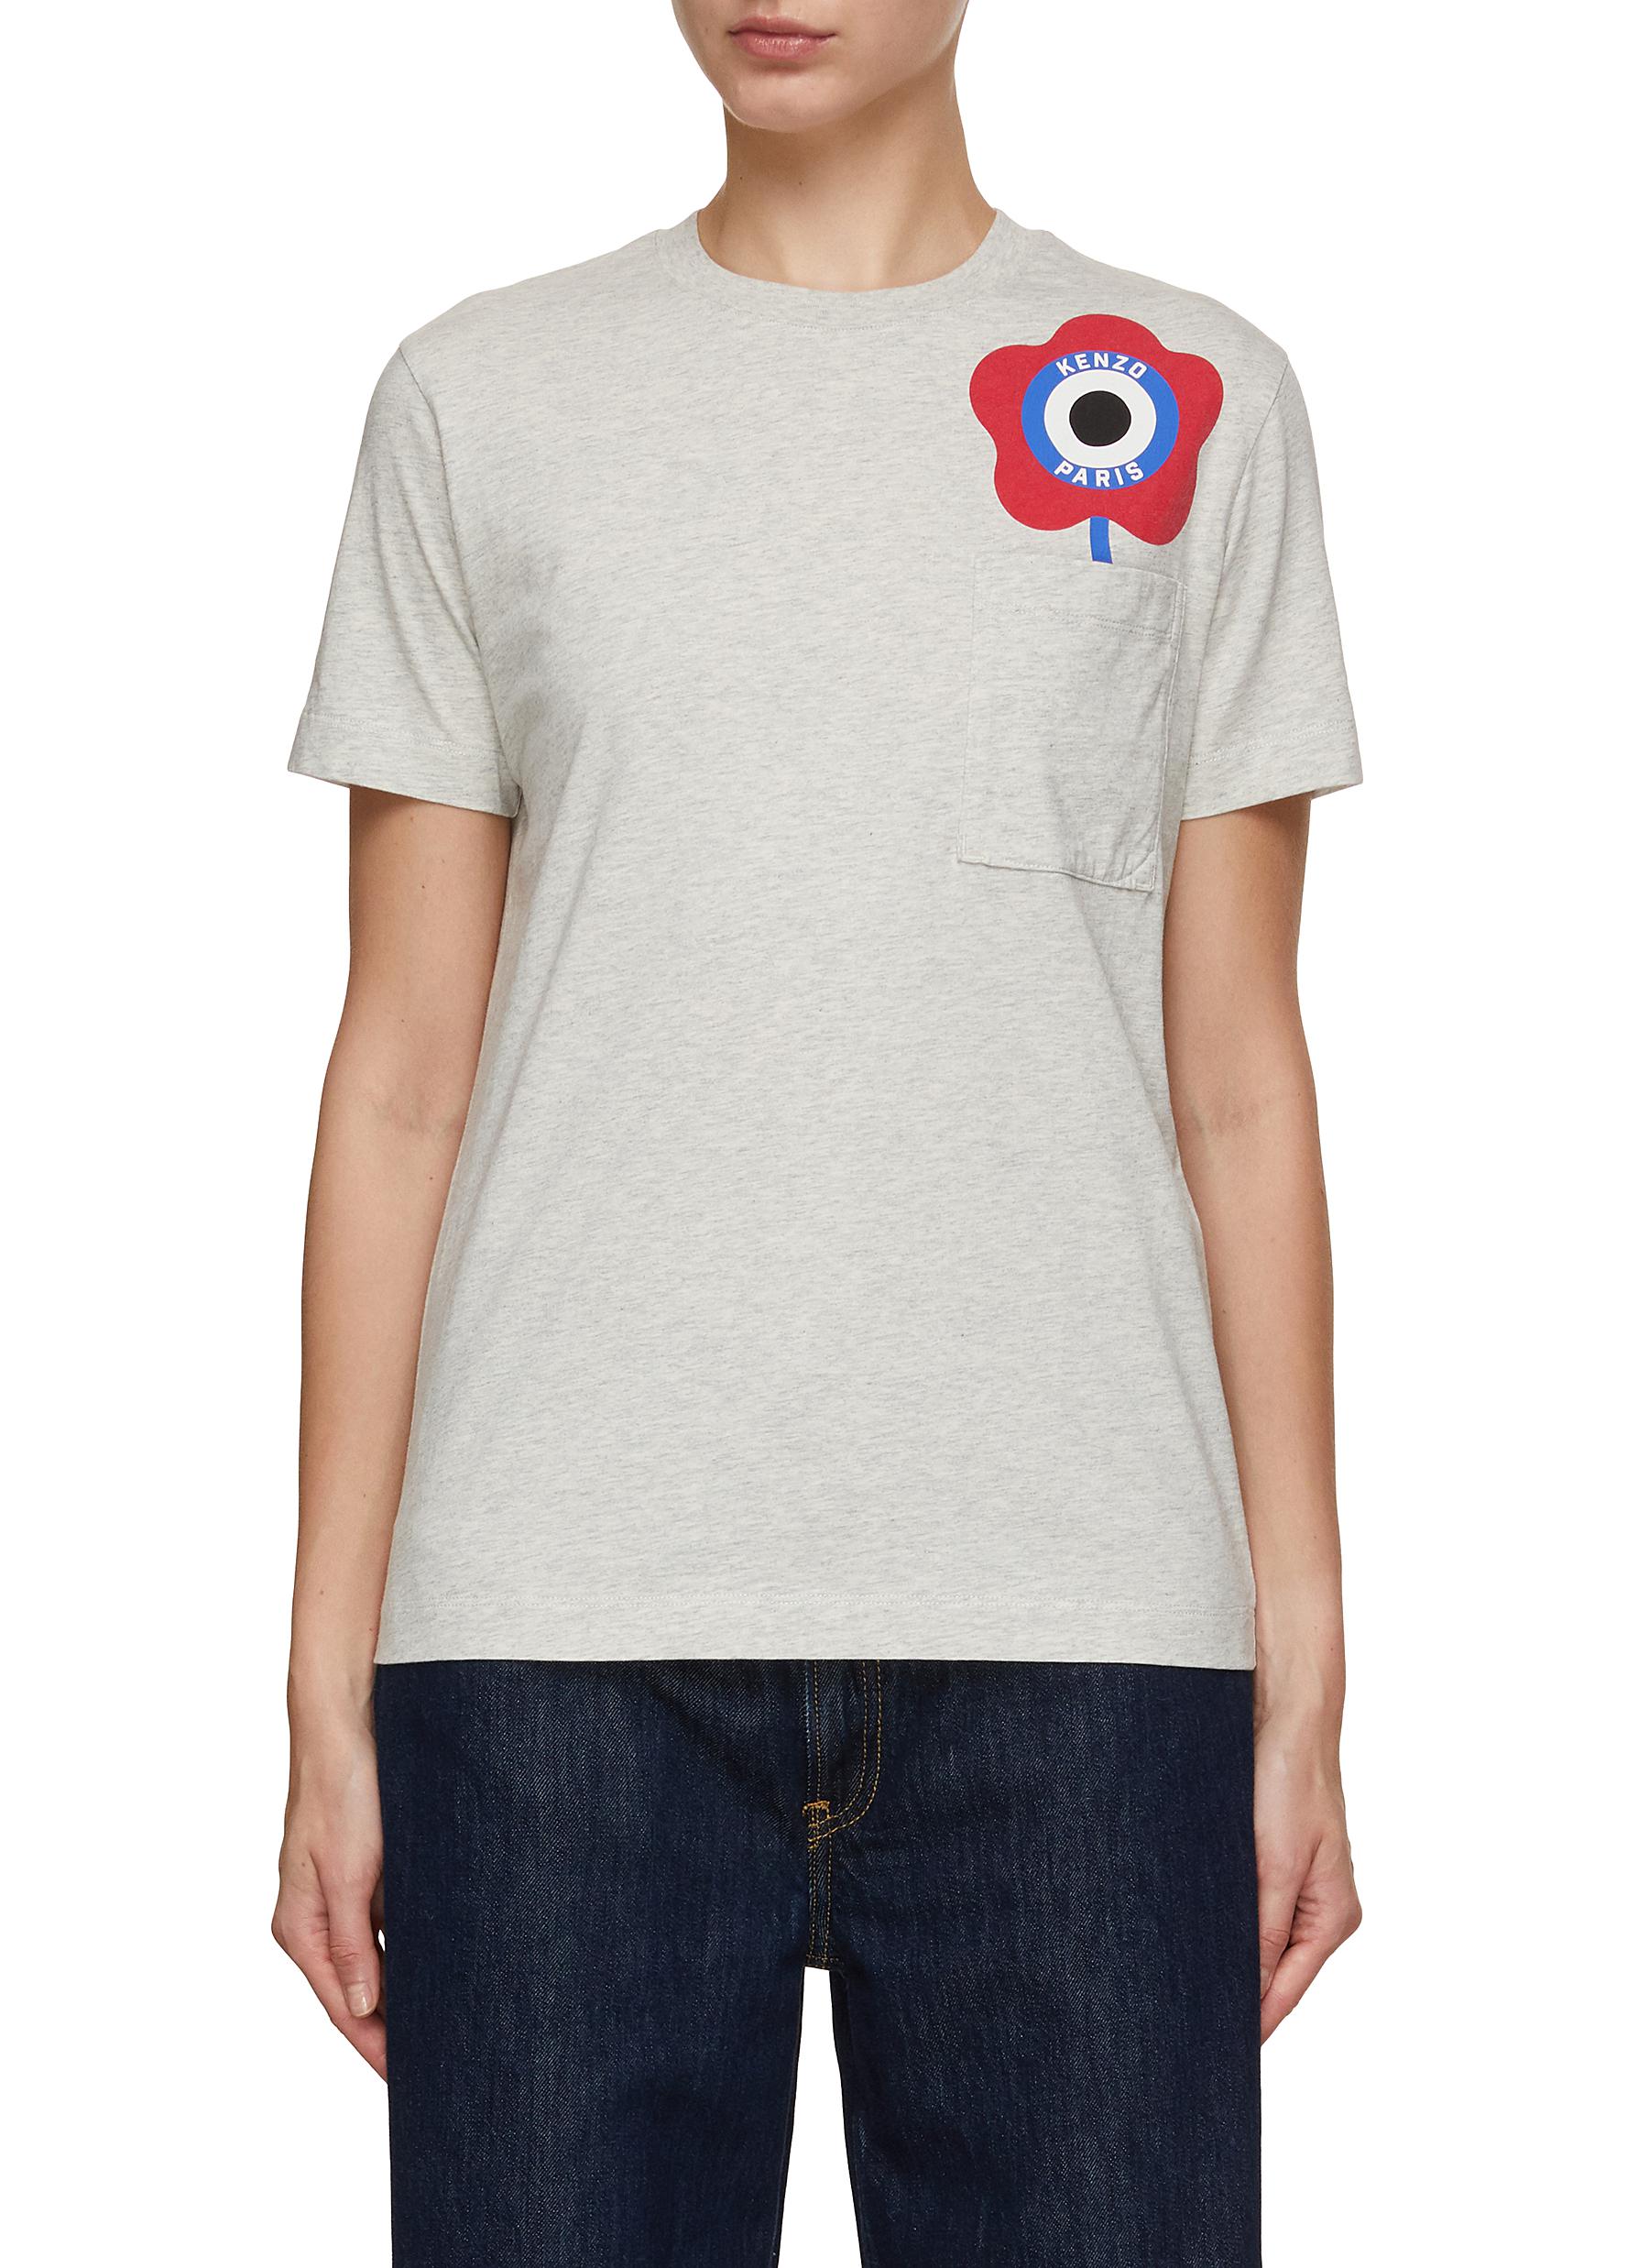 Target Crest Print Cotton T-Shirt